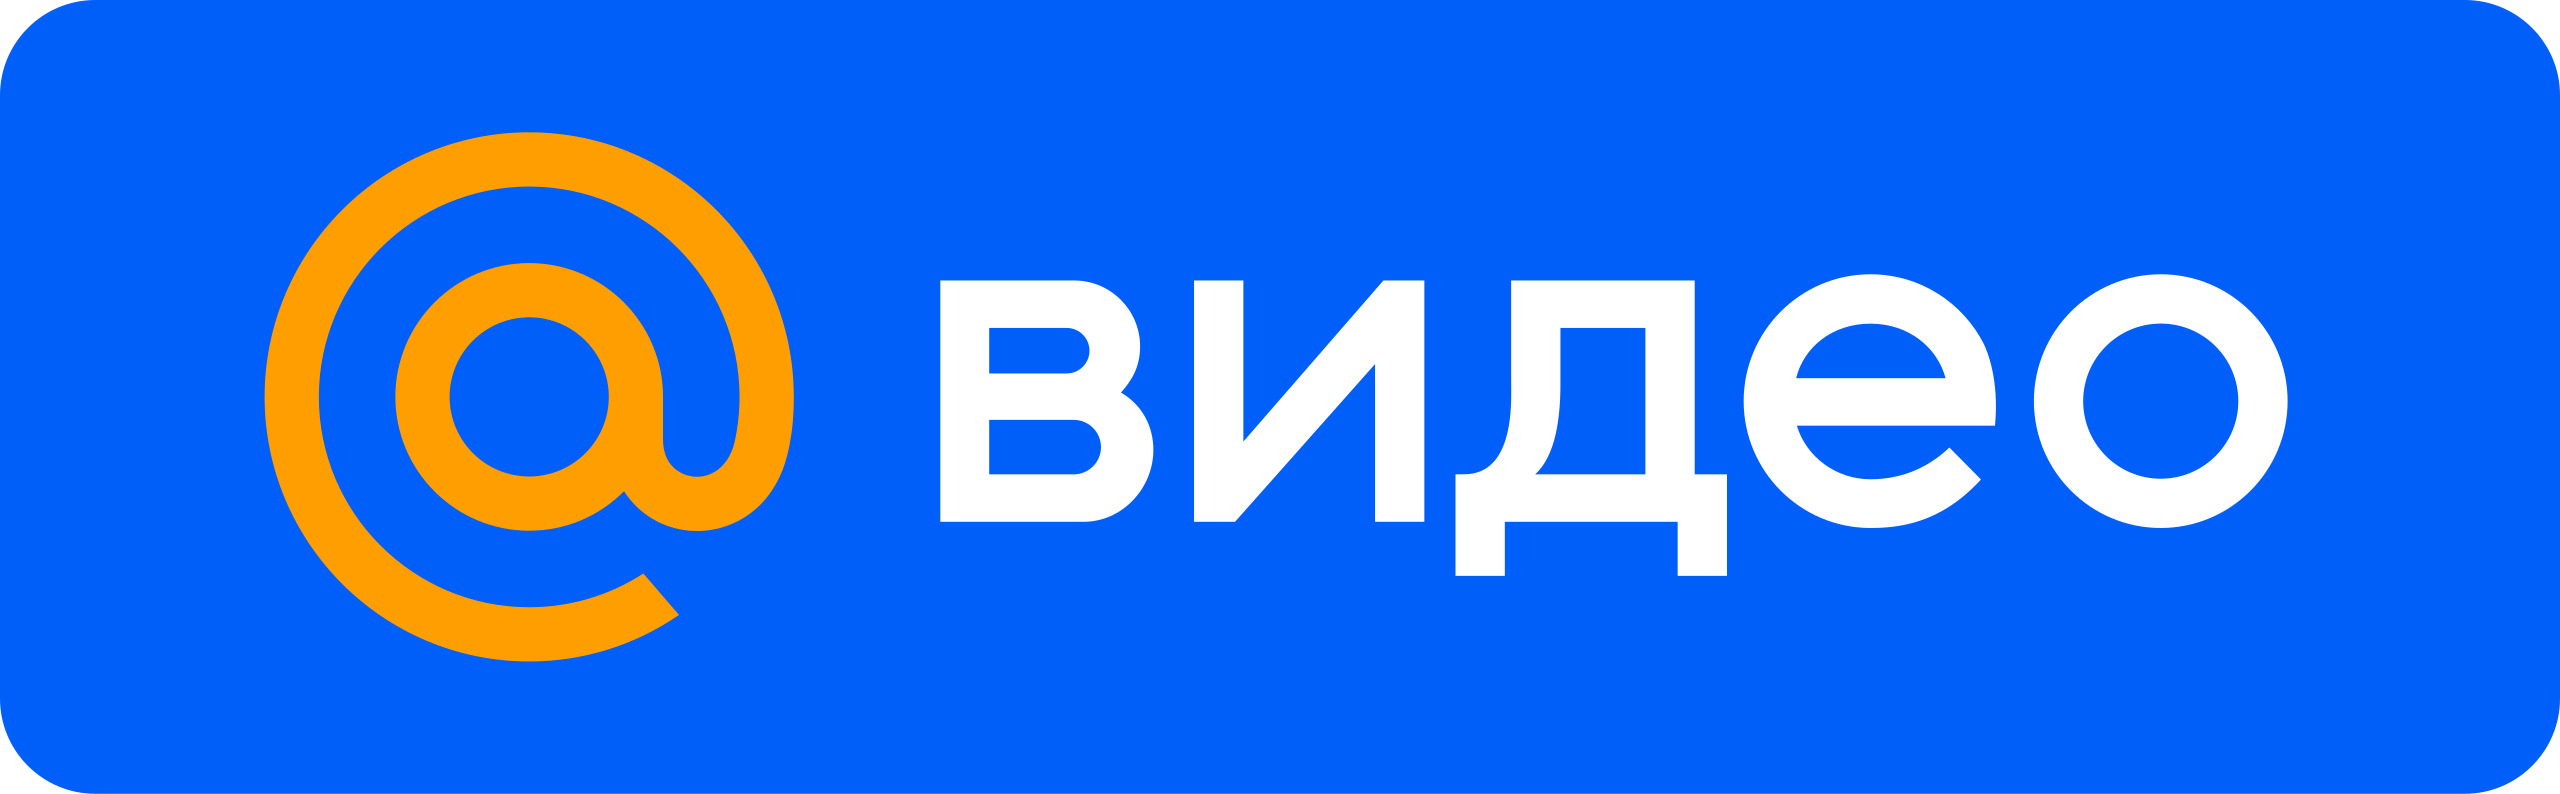 Мальчик видео майл ру. Майл ру. Видео mail.ru. Mail.ru логотип. Логотип почты мейл.